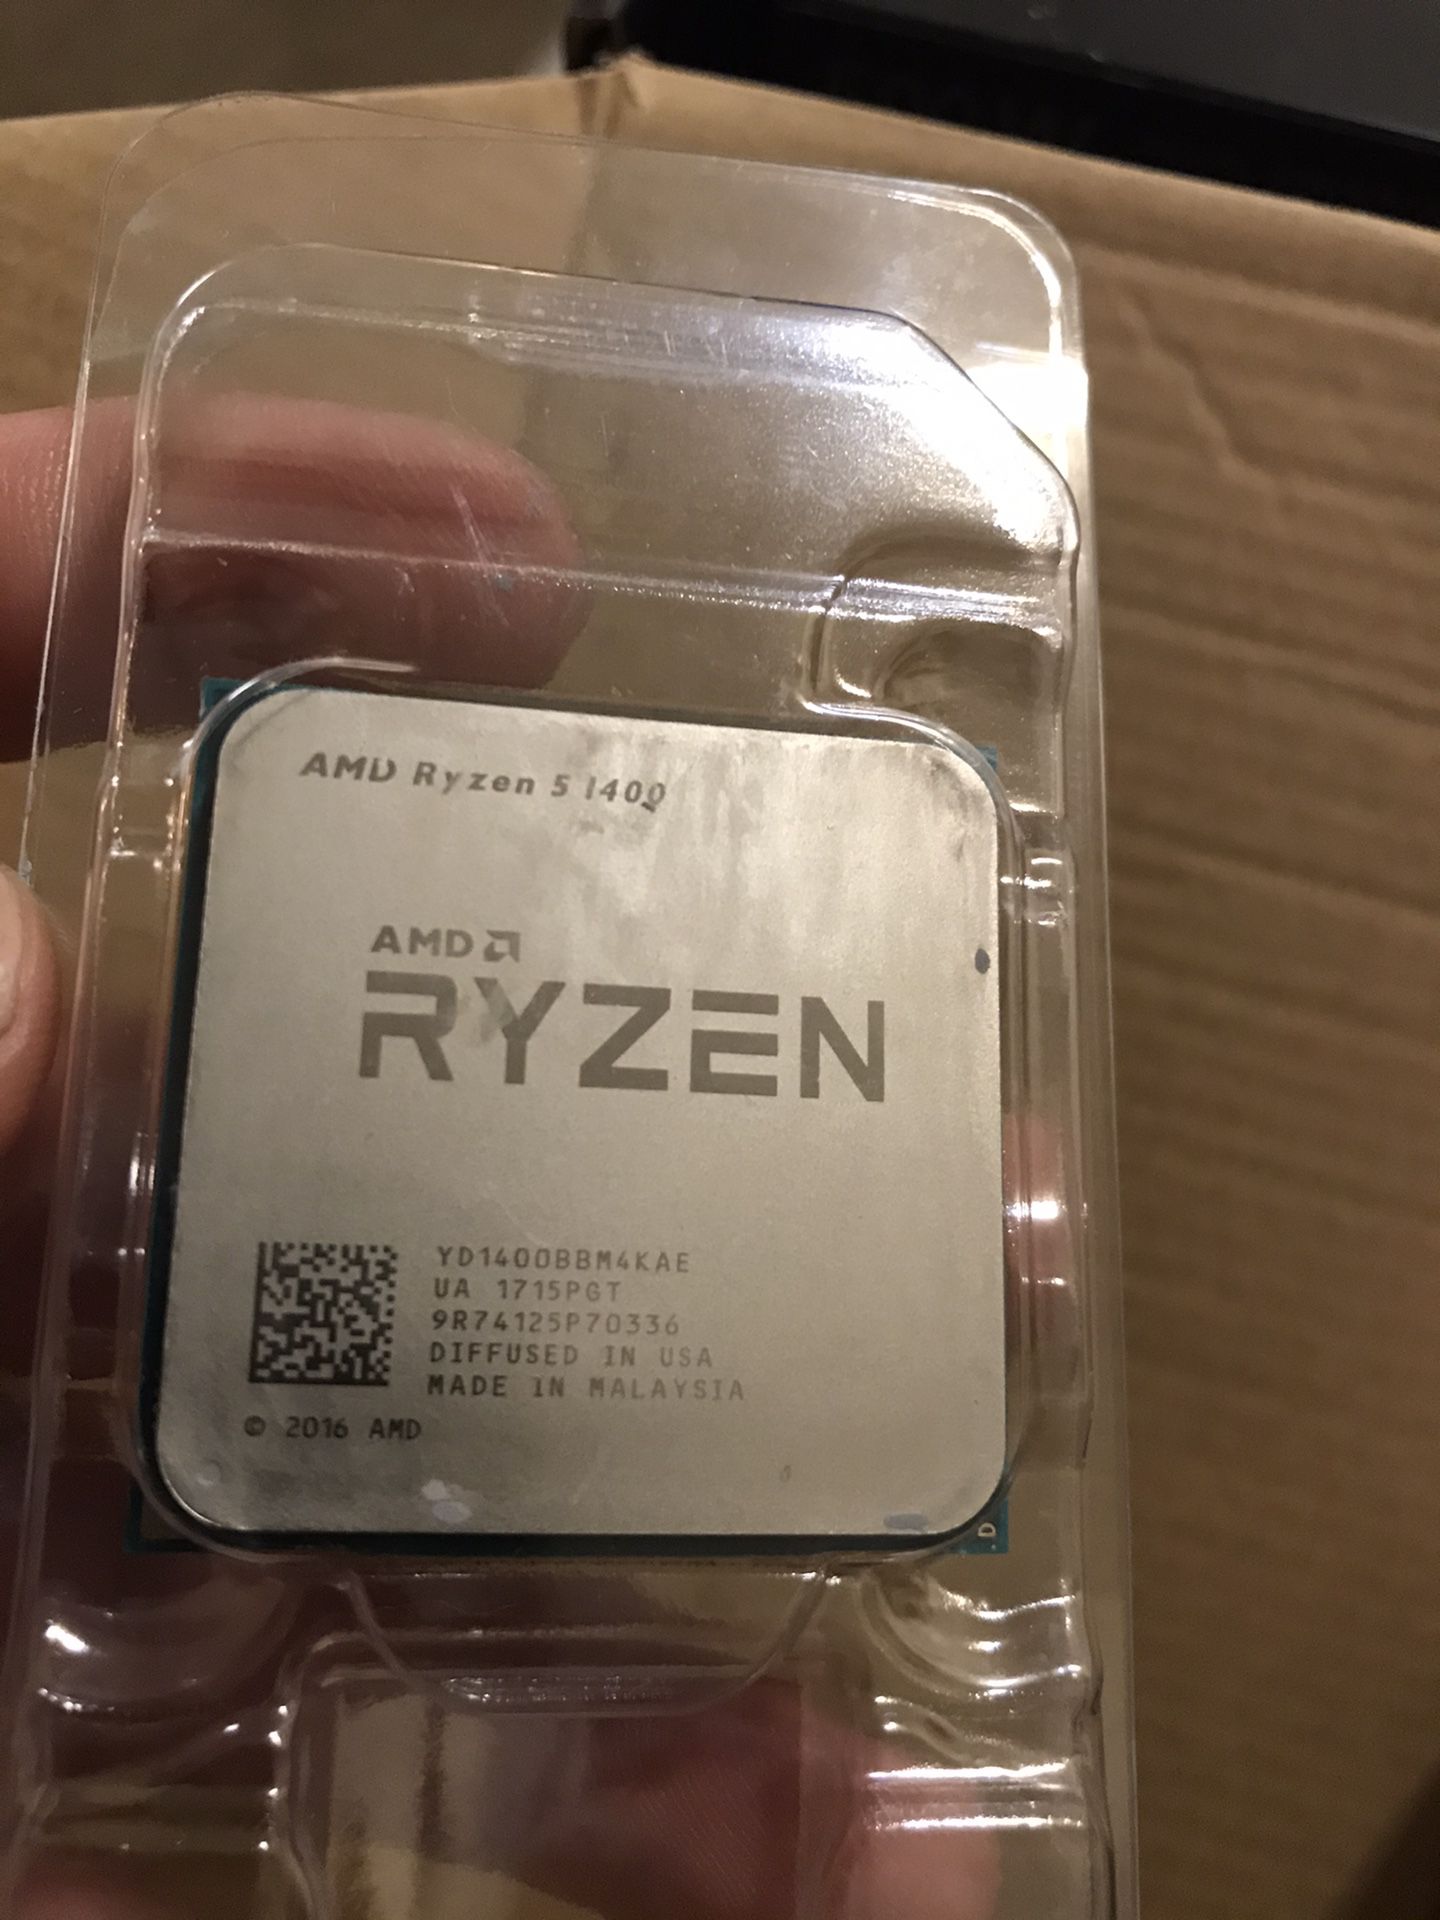 Ryzen 5 1400 CPU